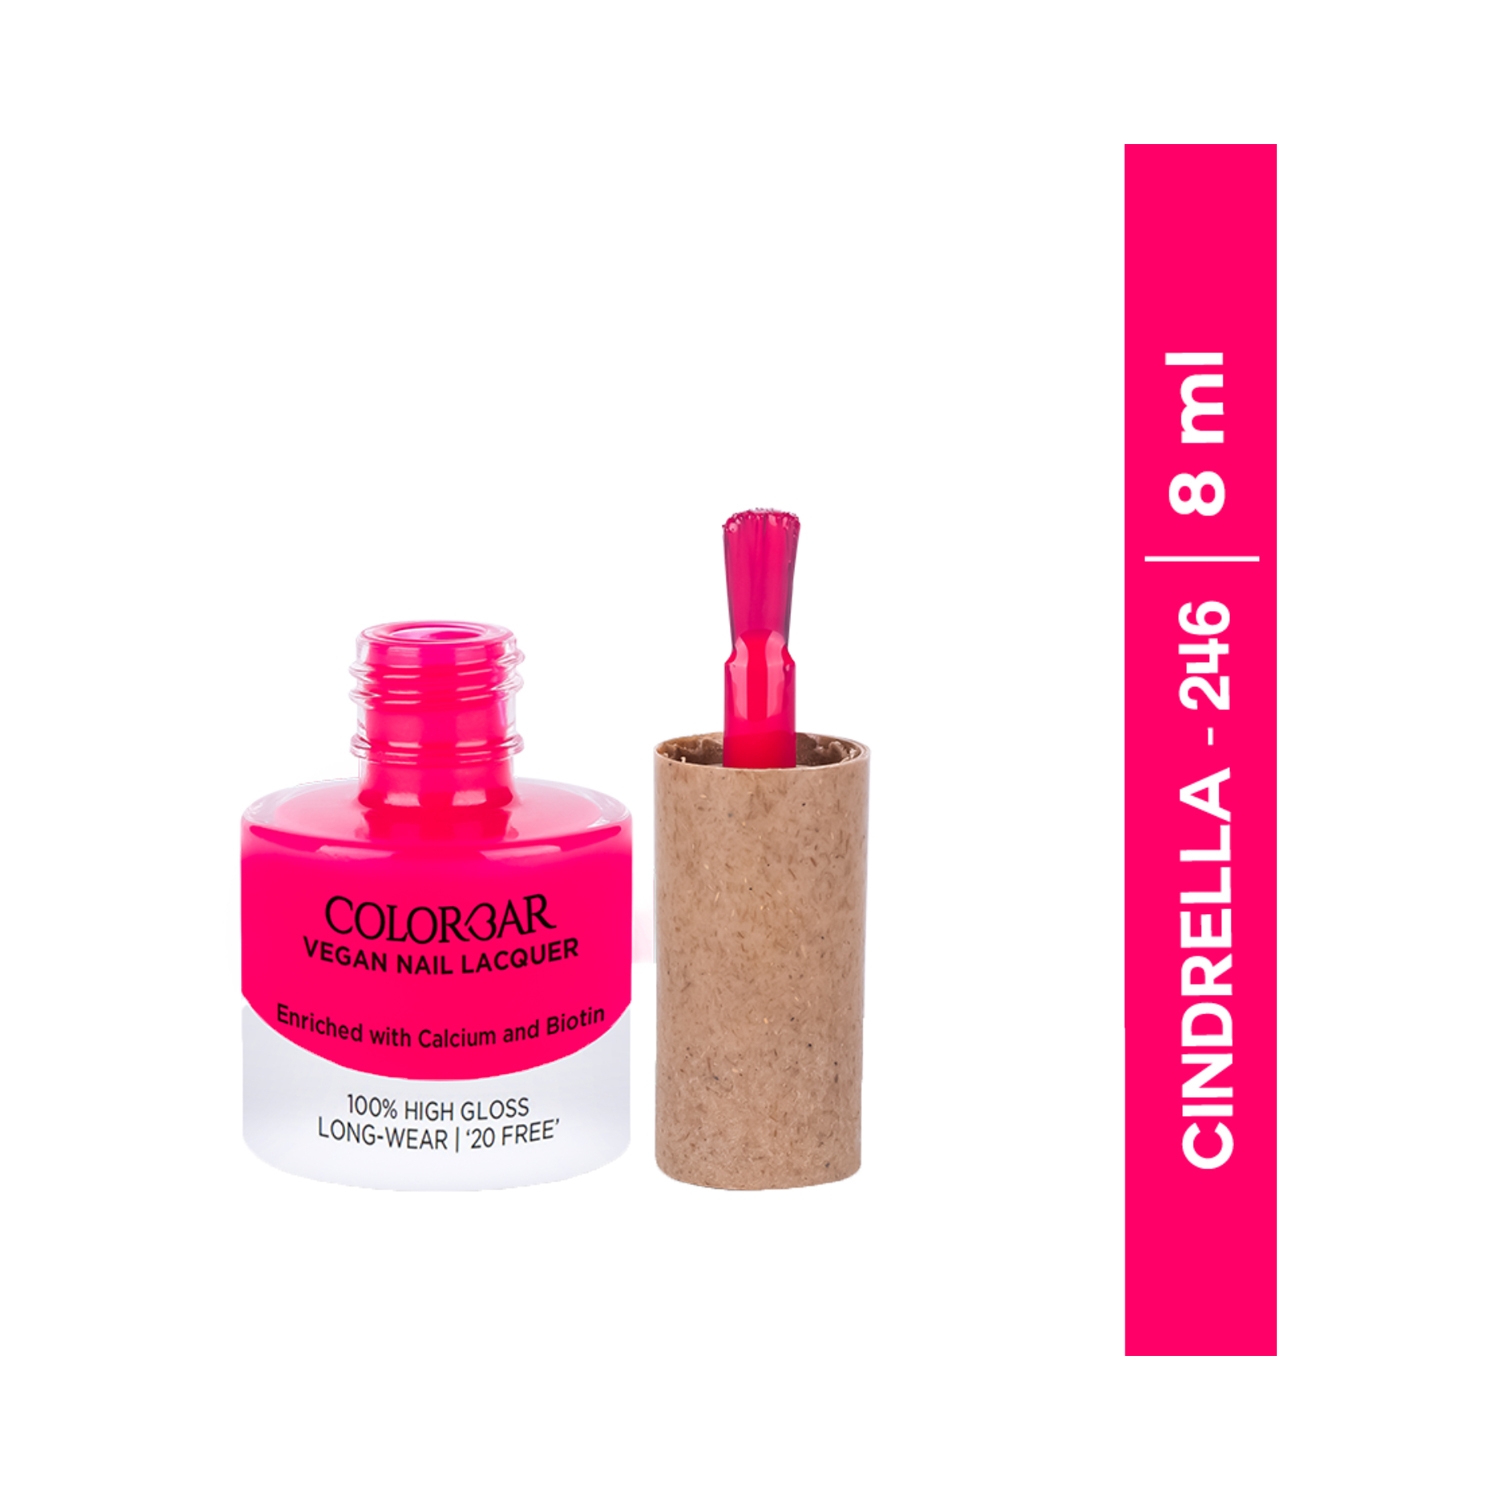 Colorbar | Colorbar Vegan Nail Lacquer - 246 Cinderella (8 ml)